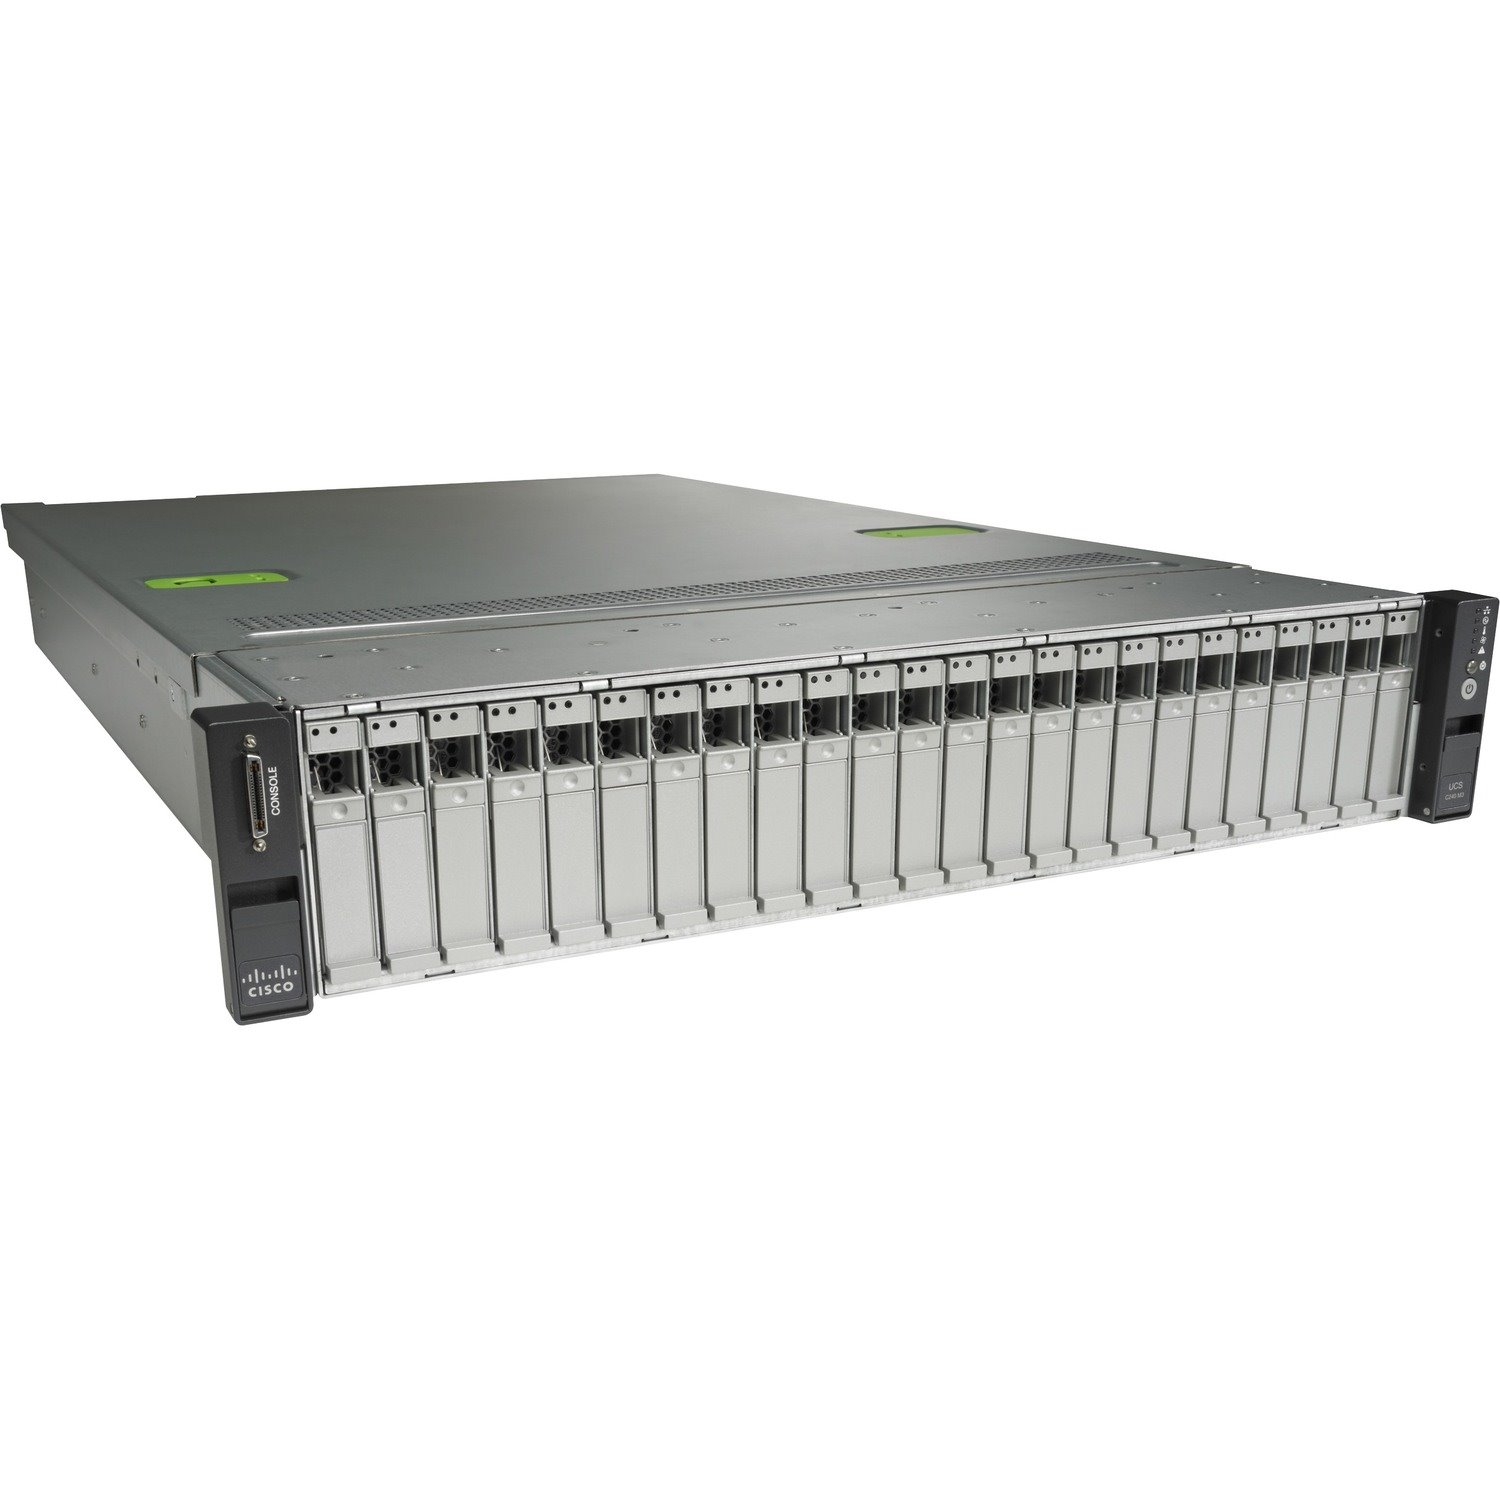 Cisco C240 M3 2U Rack Server - 2 x Intel Xeon E5-2680 2.70 GHz - 96 GB RAM - 4.80 TB HDD - (16 x 300GB) HDD Configuration - Serial ATA, Serial Attached SCSI (SAS) Controller - Refurbished